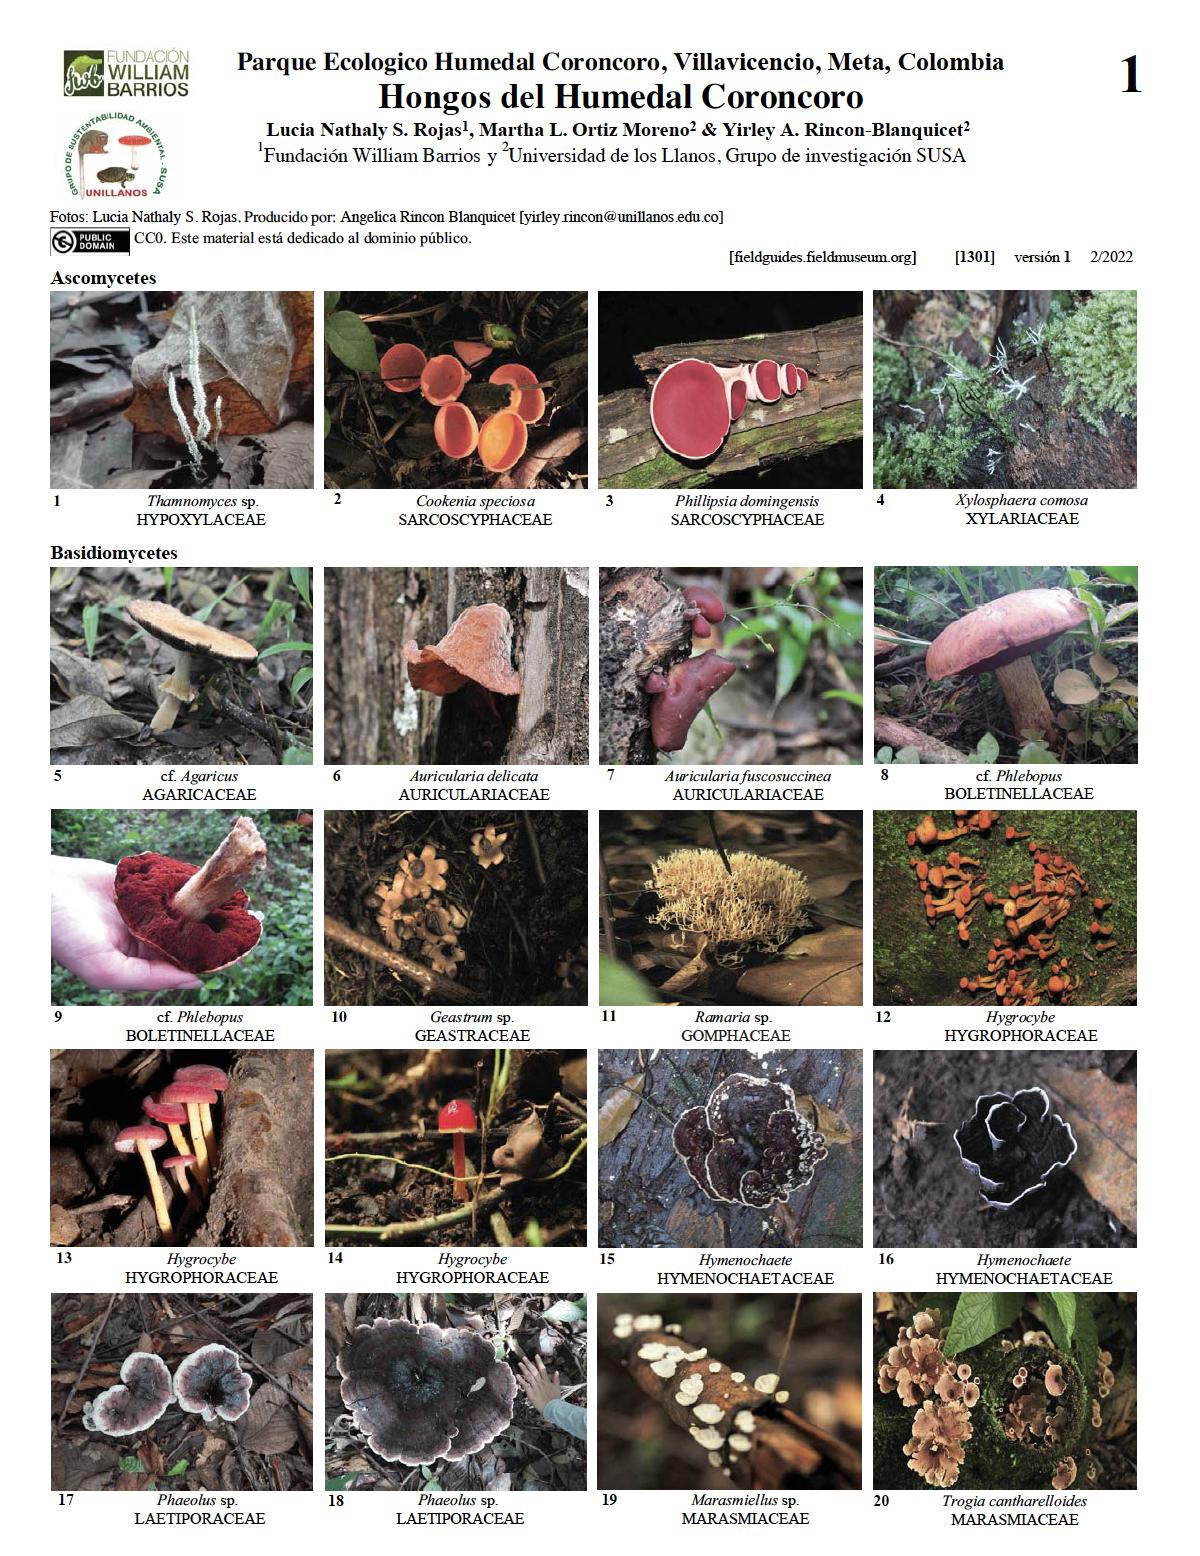 1301_colombia_fungi_of_coronco_park.pdf 